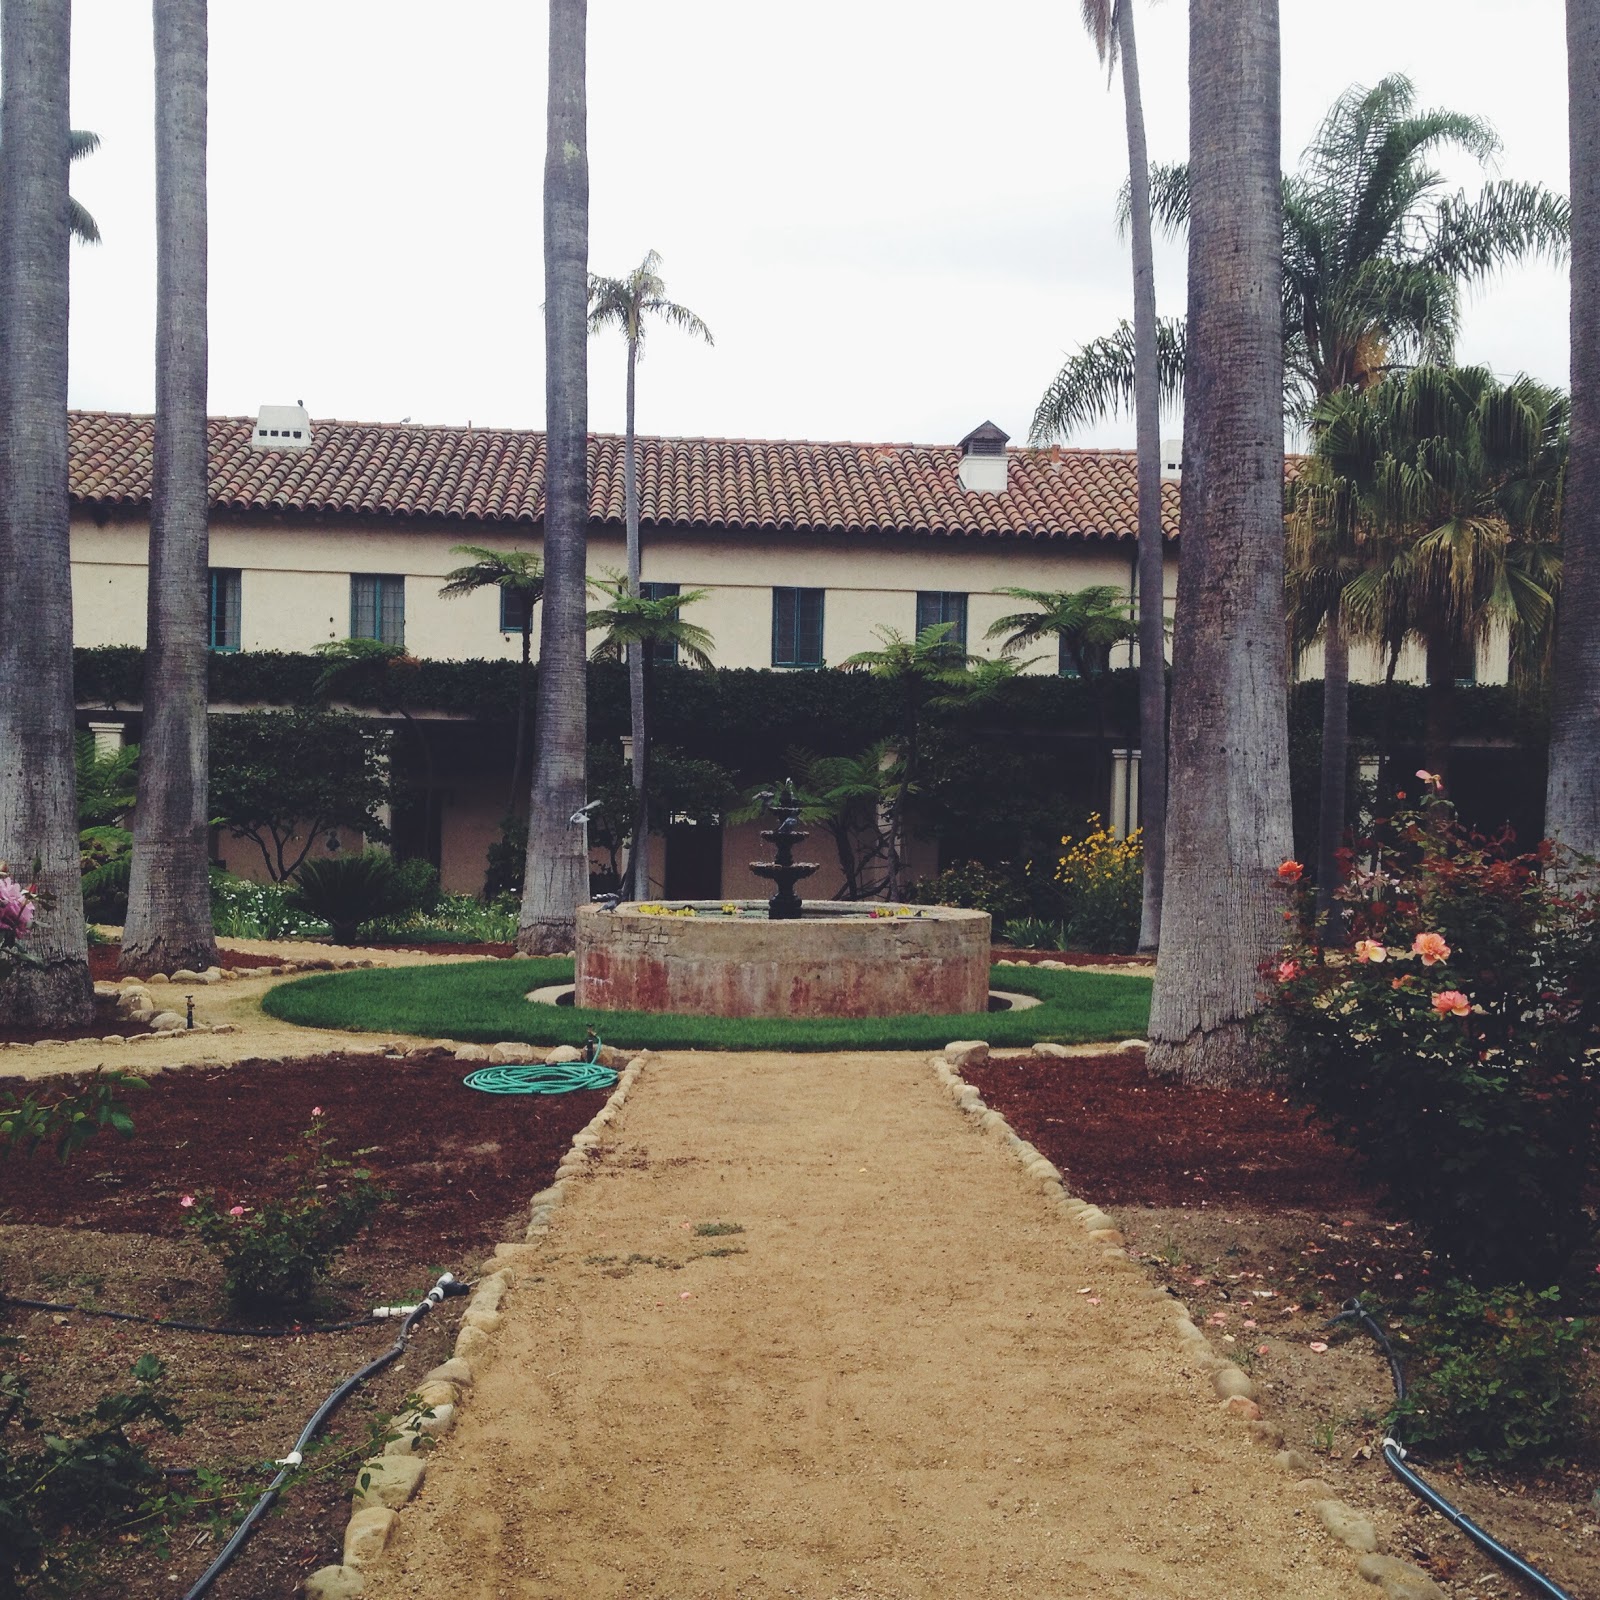 Old Santa Barbara Mission fountain in garden